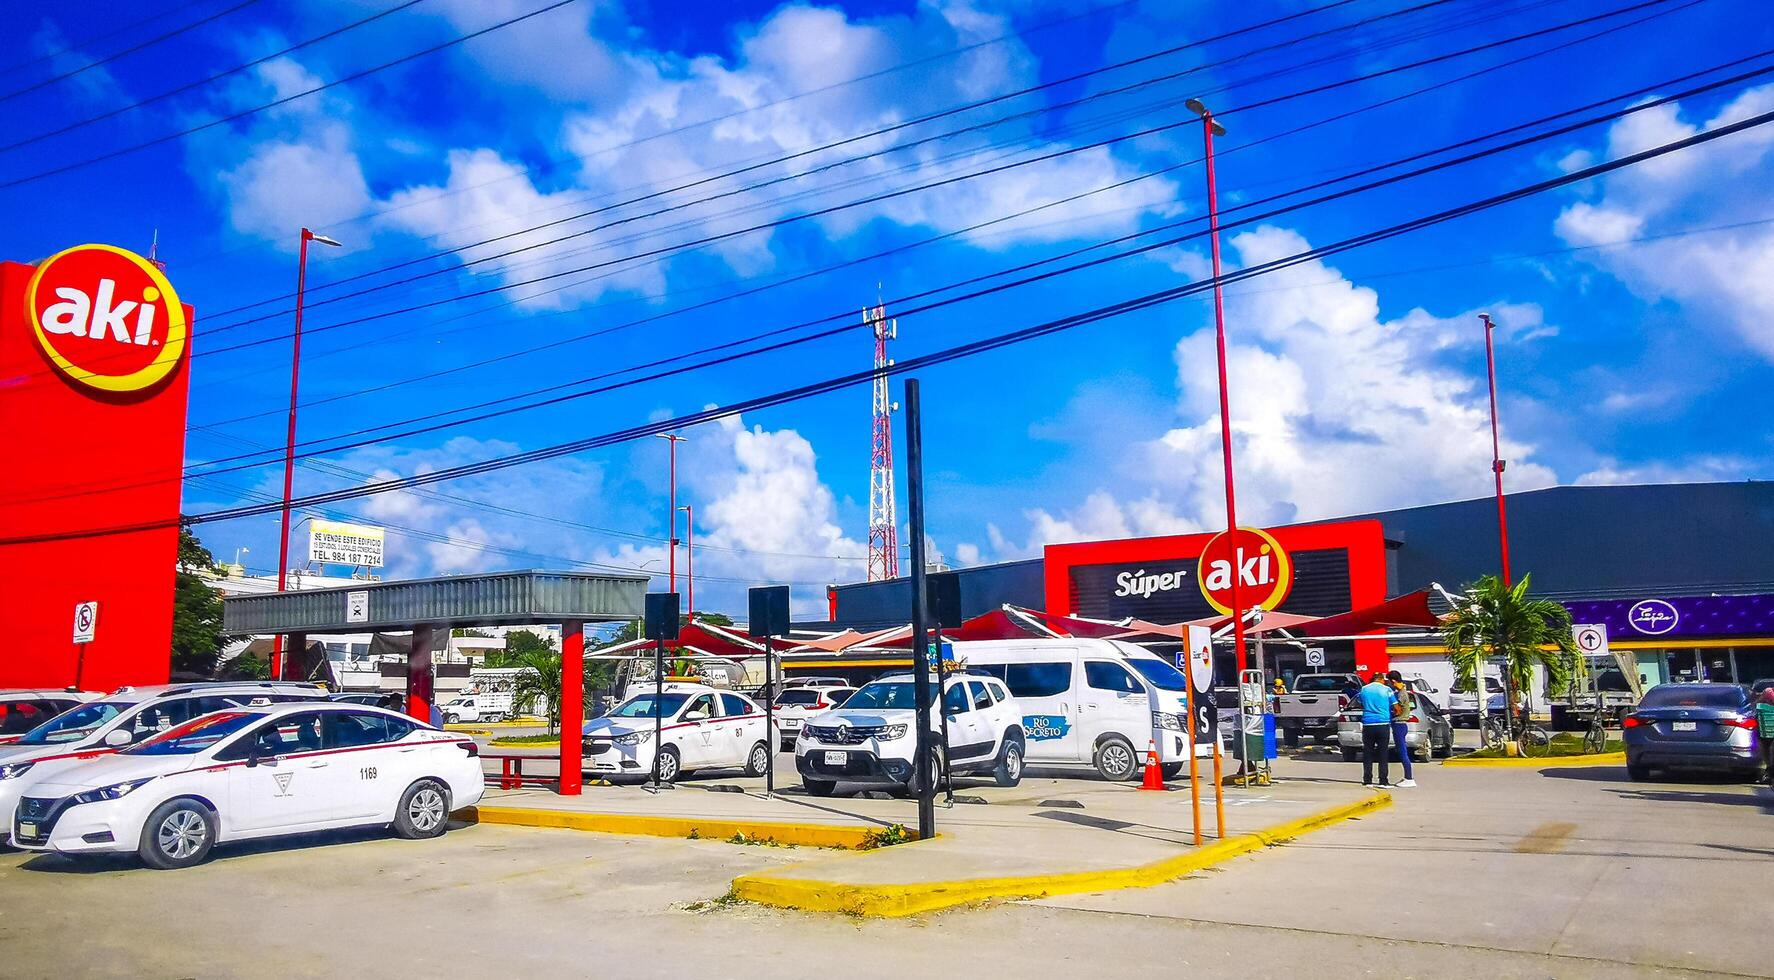 Tulum Quintana Roo Mexico 2023 Super aki supermarket market store shop entrance in Tulum Mexico. photo